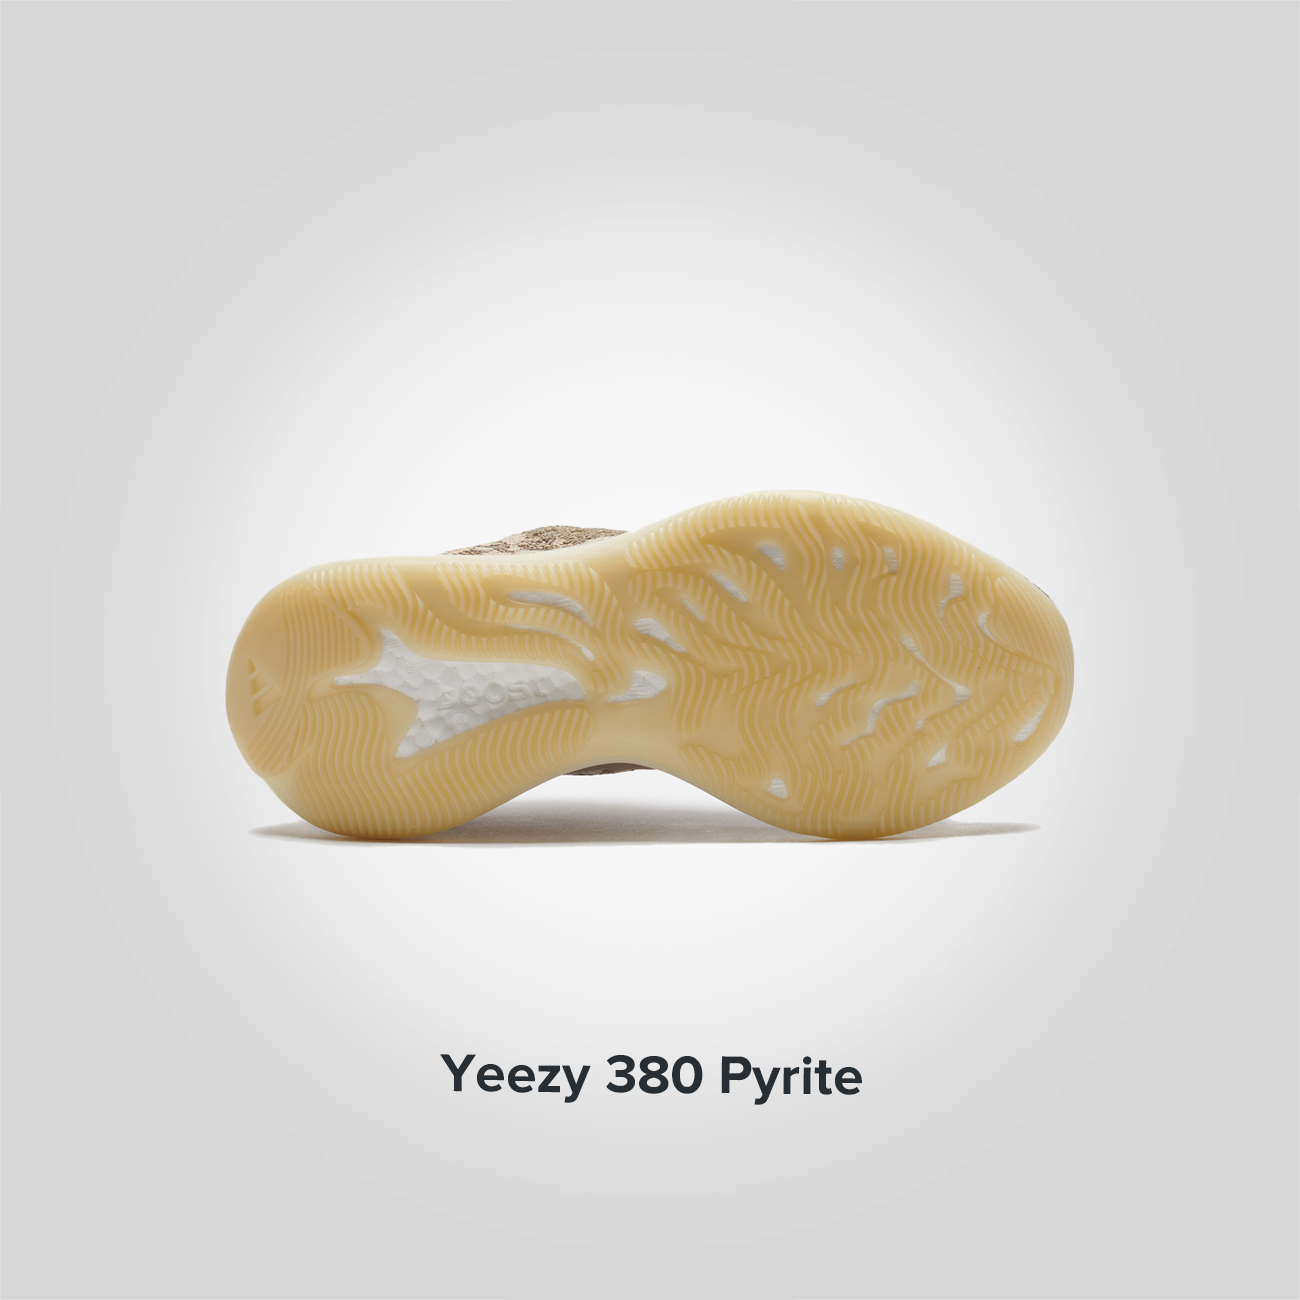 Yeezy 380 Pyrite